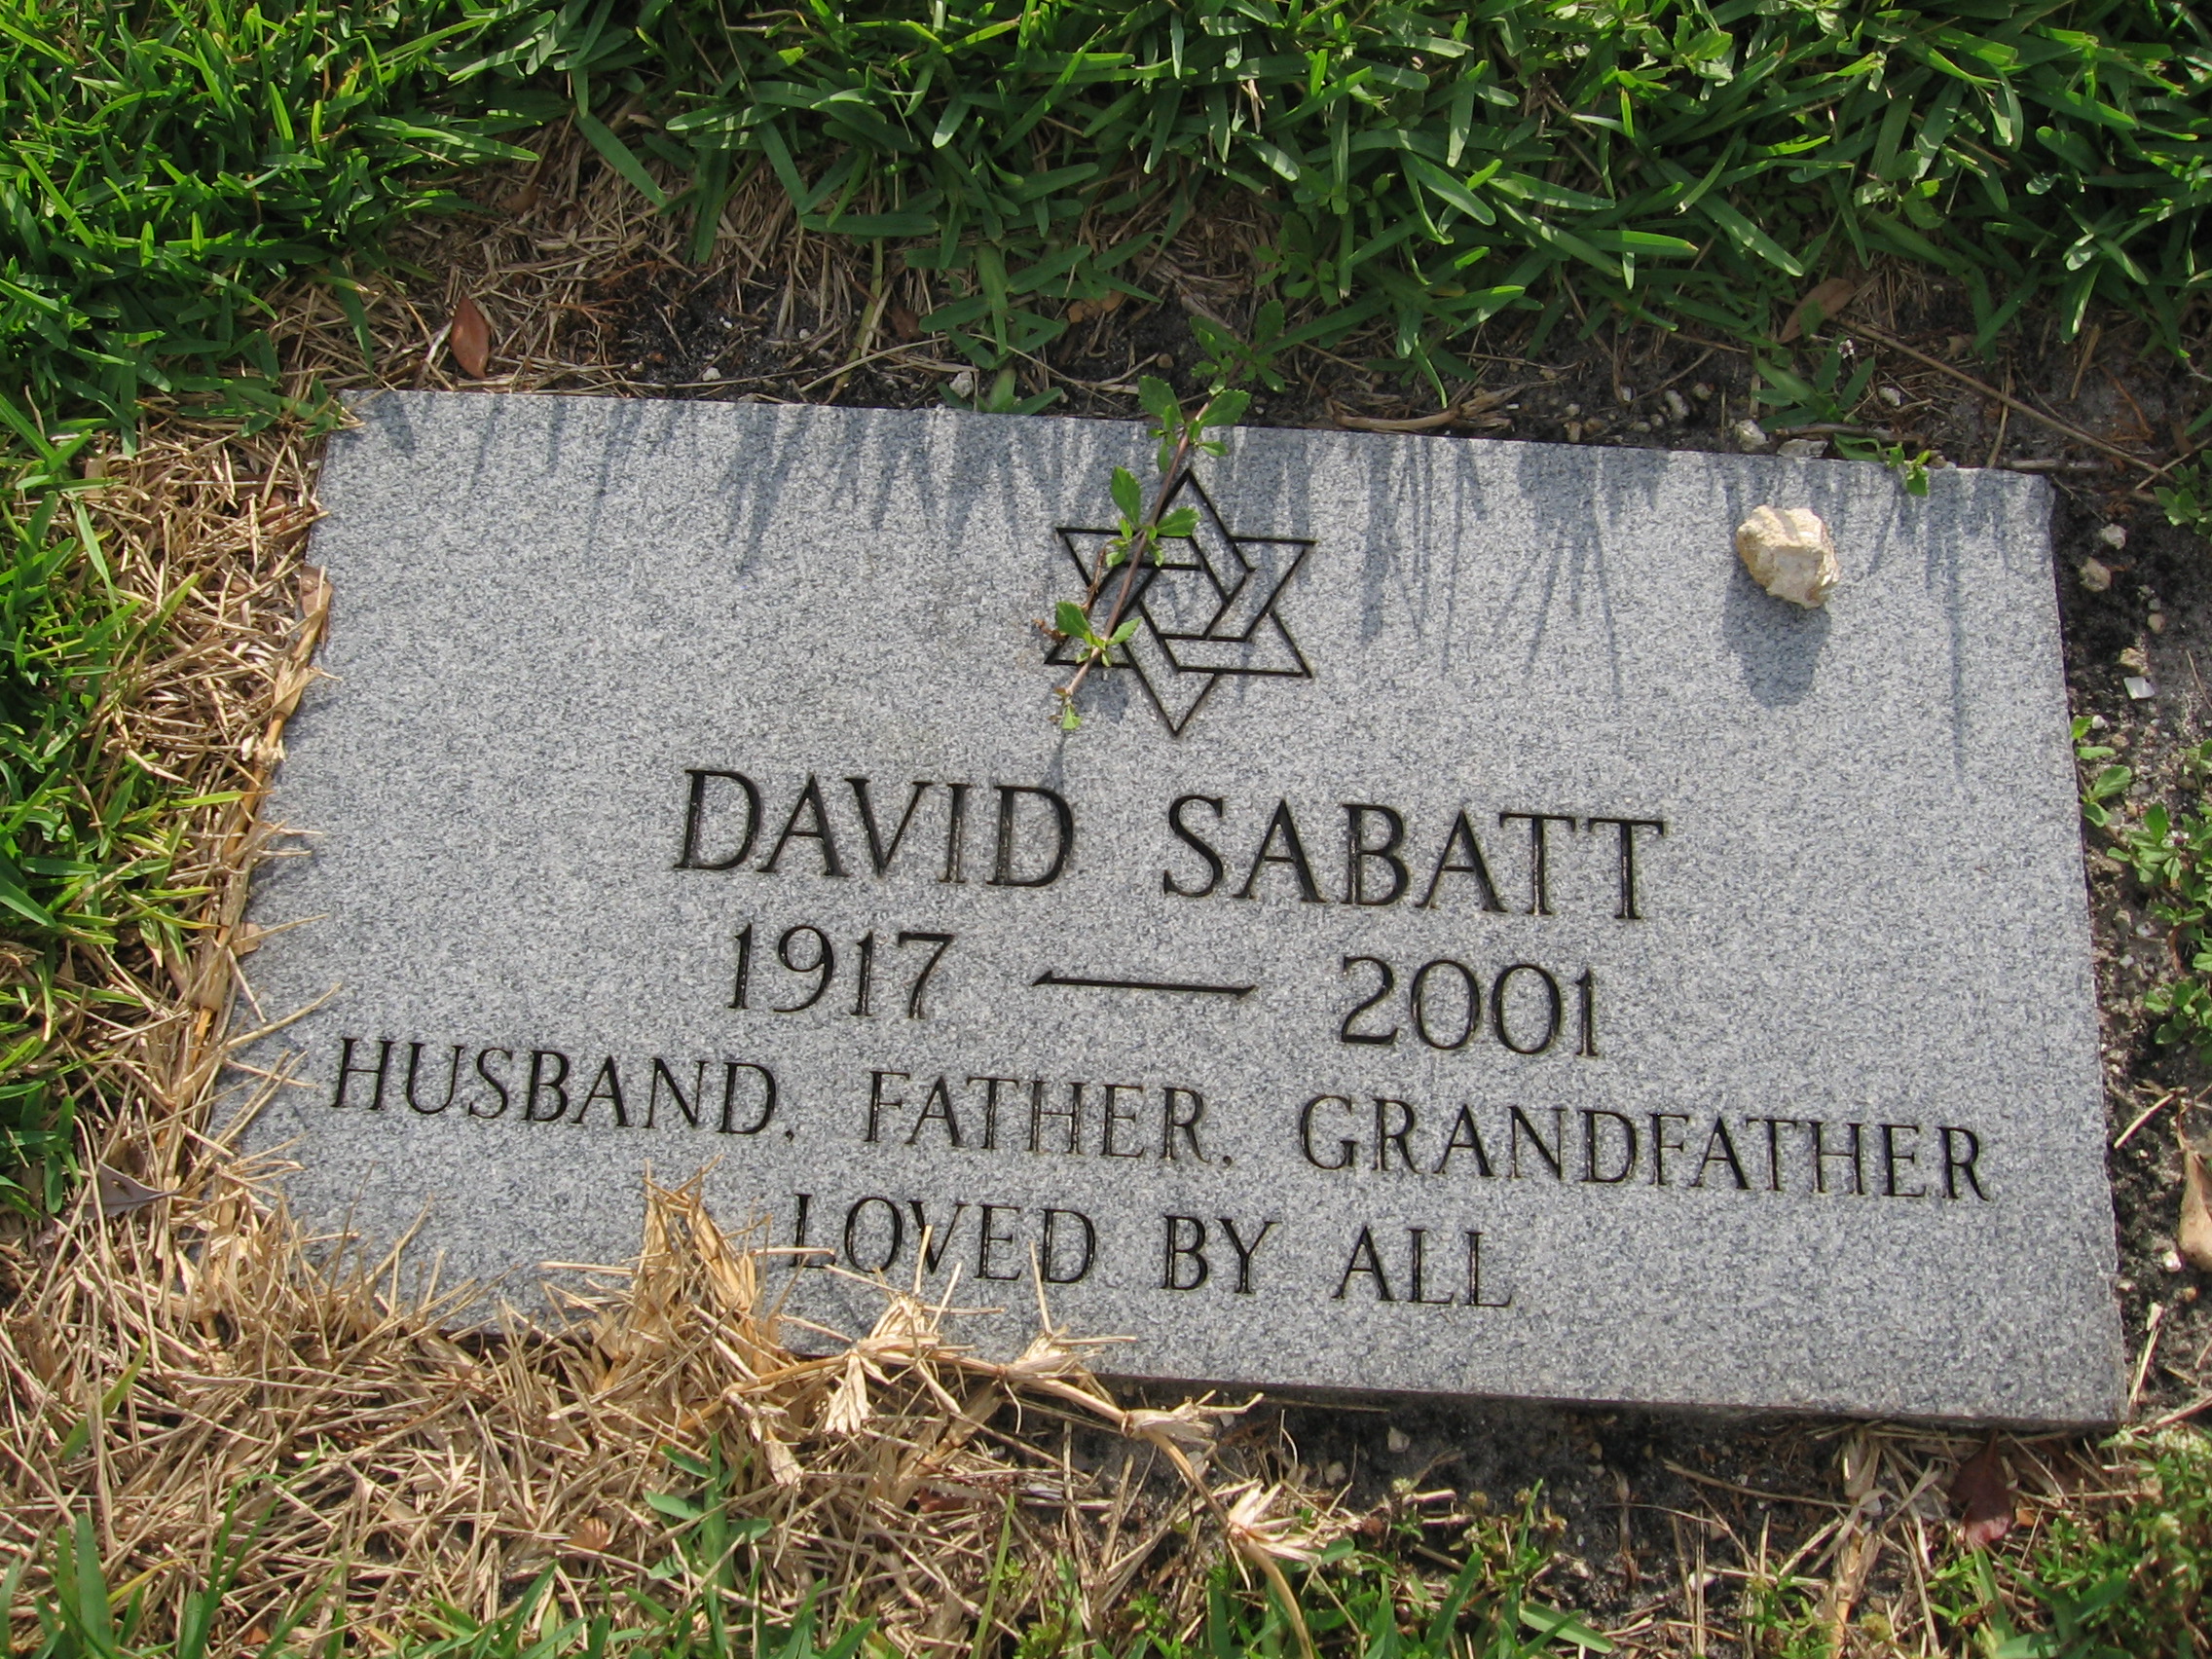 David Sabatt